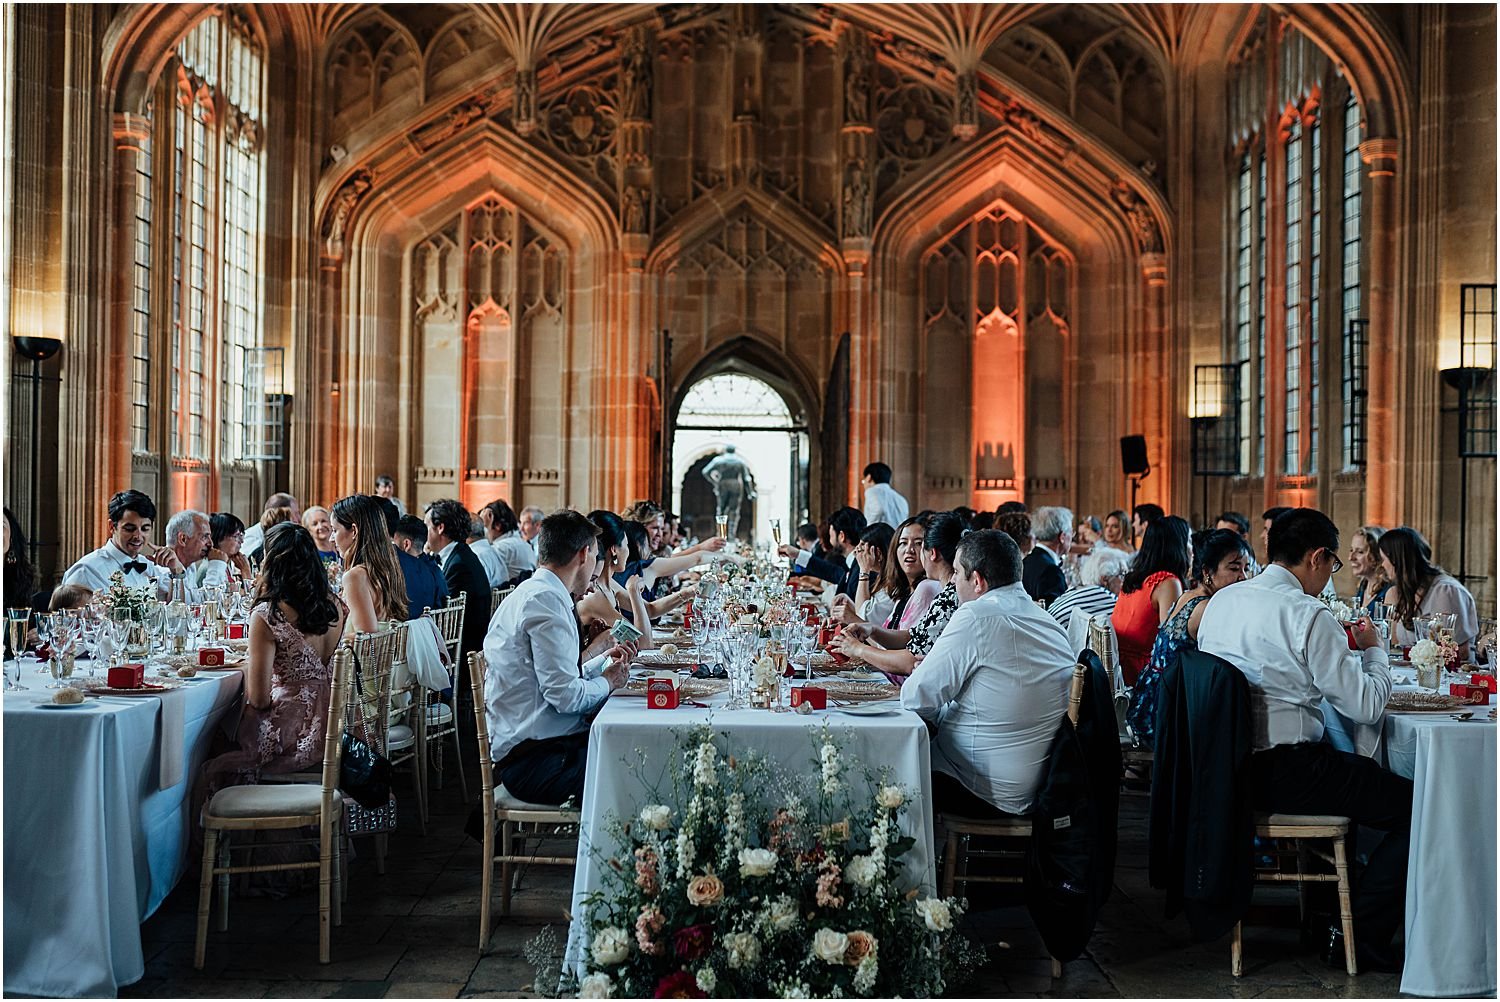 Wedding reception in Divinity School Bodleian Library